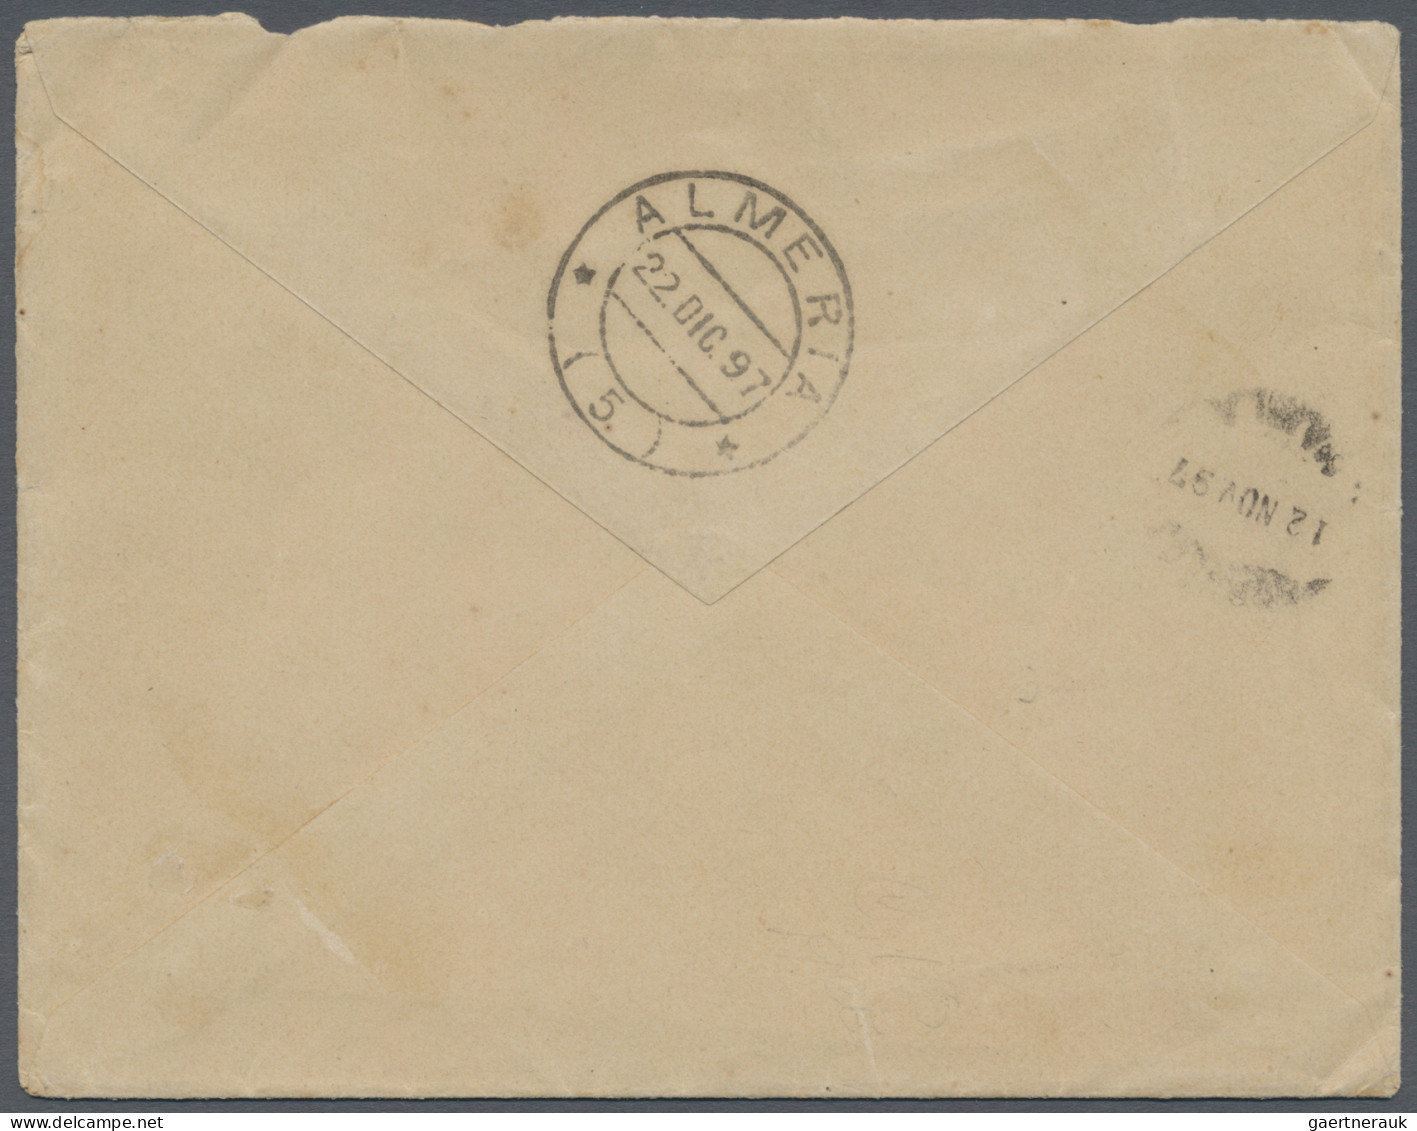 Deutsche Koloninen - Karolinen: PALAU-Inseln: 1897, "GOBIERNO P.OCCIDENTAL DE CA - Caroline Islands